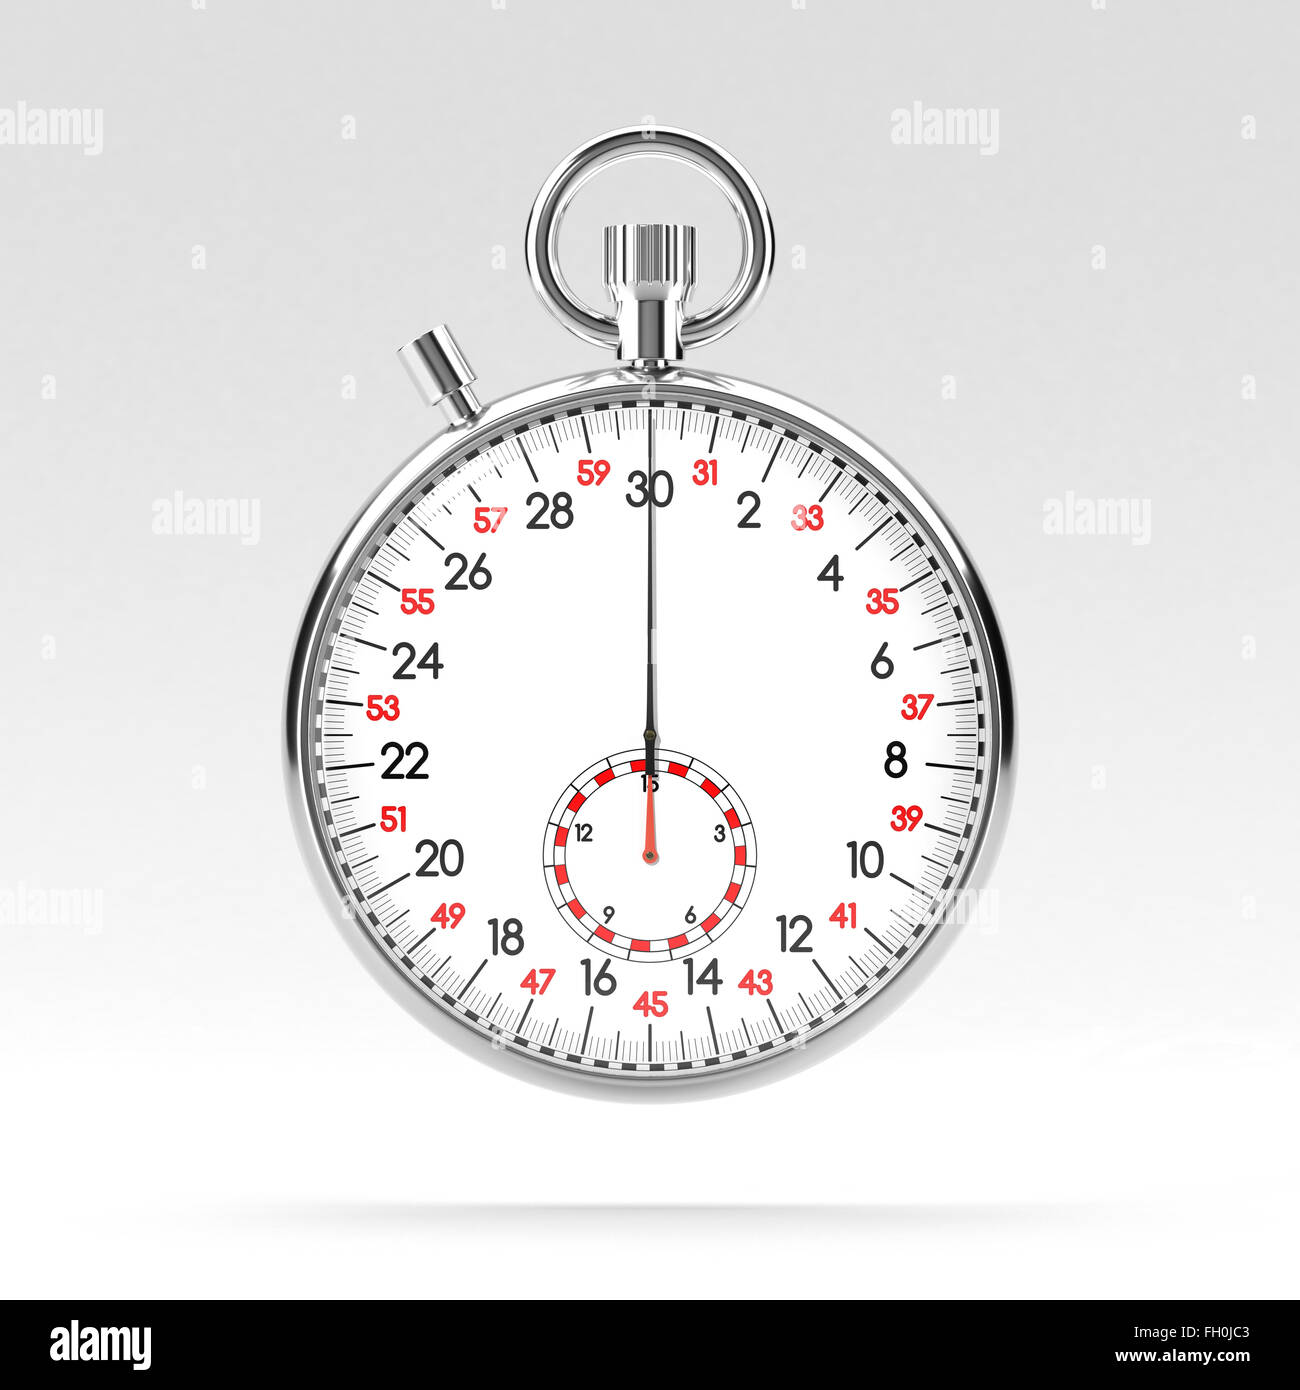 Mechanical stopwatch illustration Stock Photo